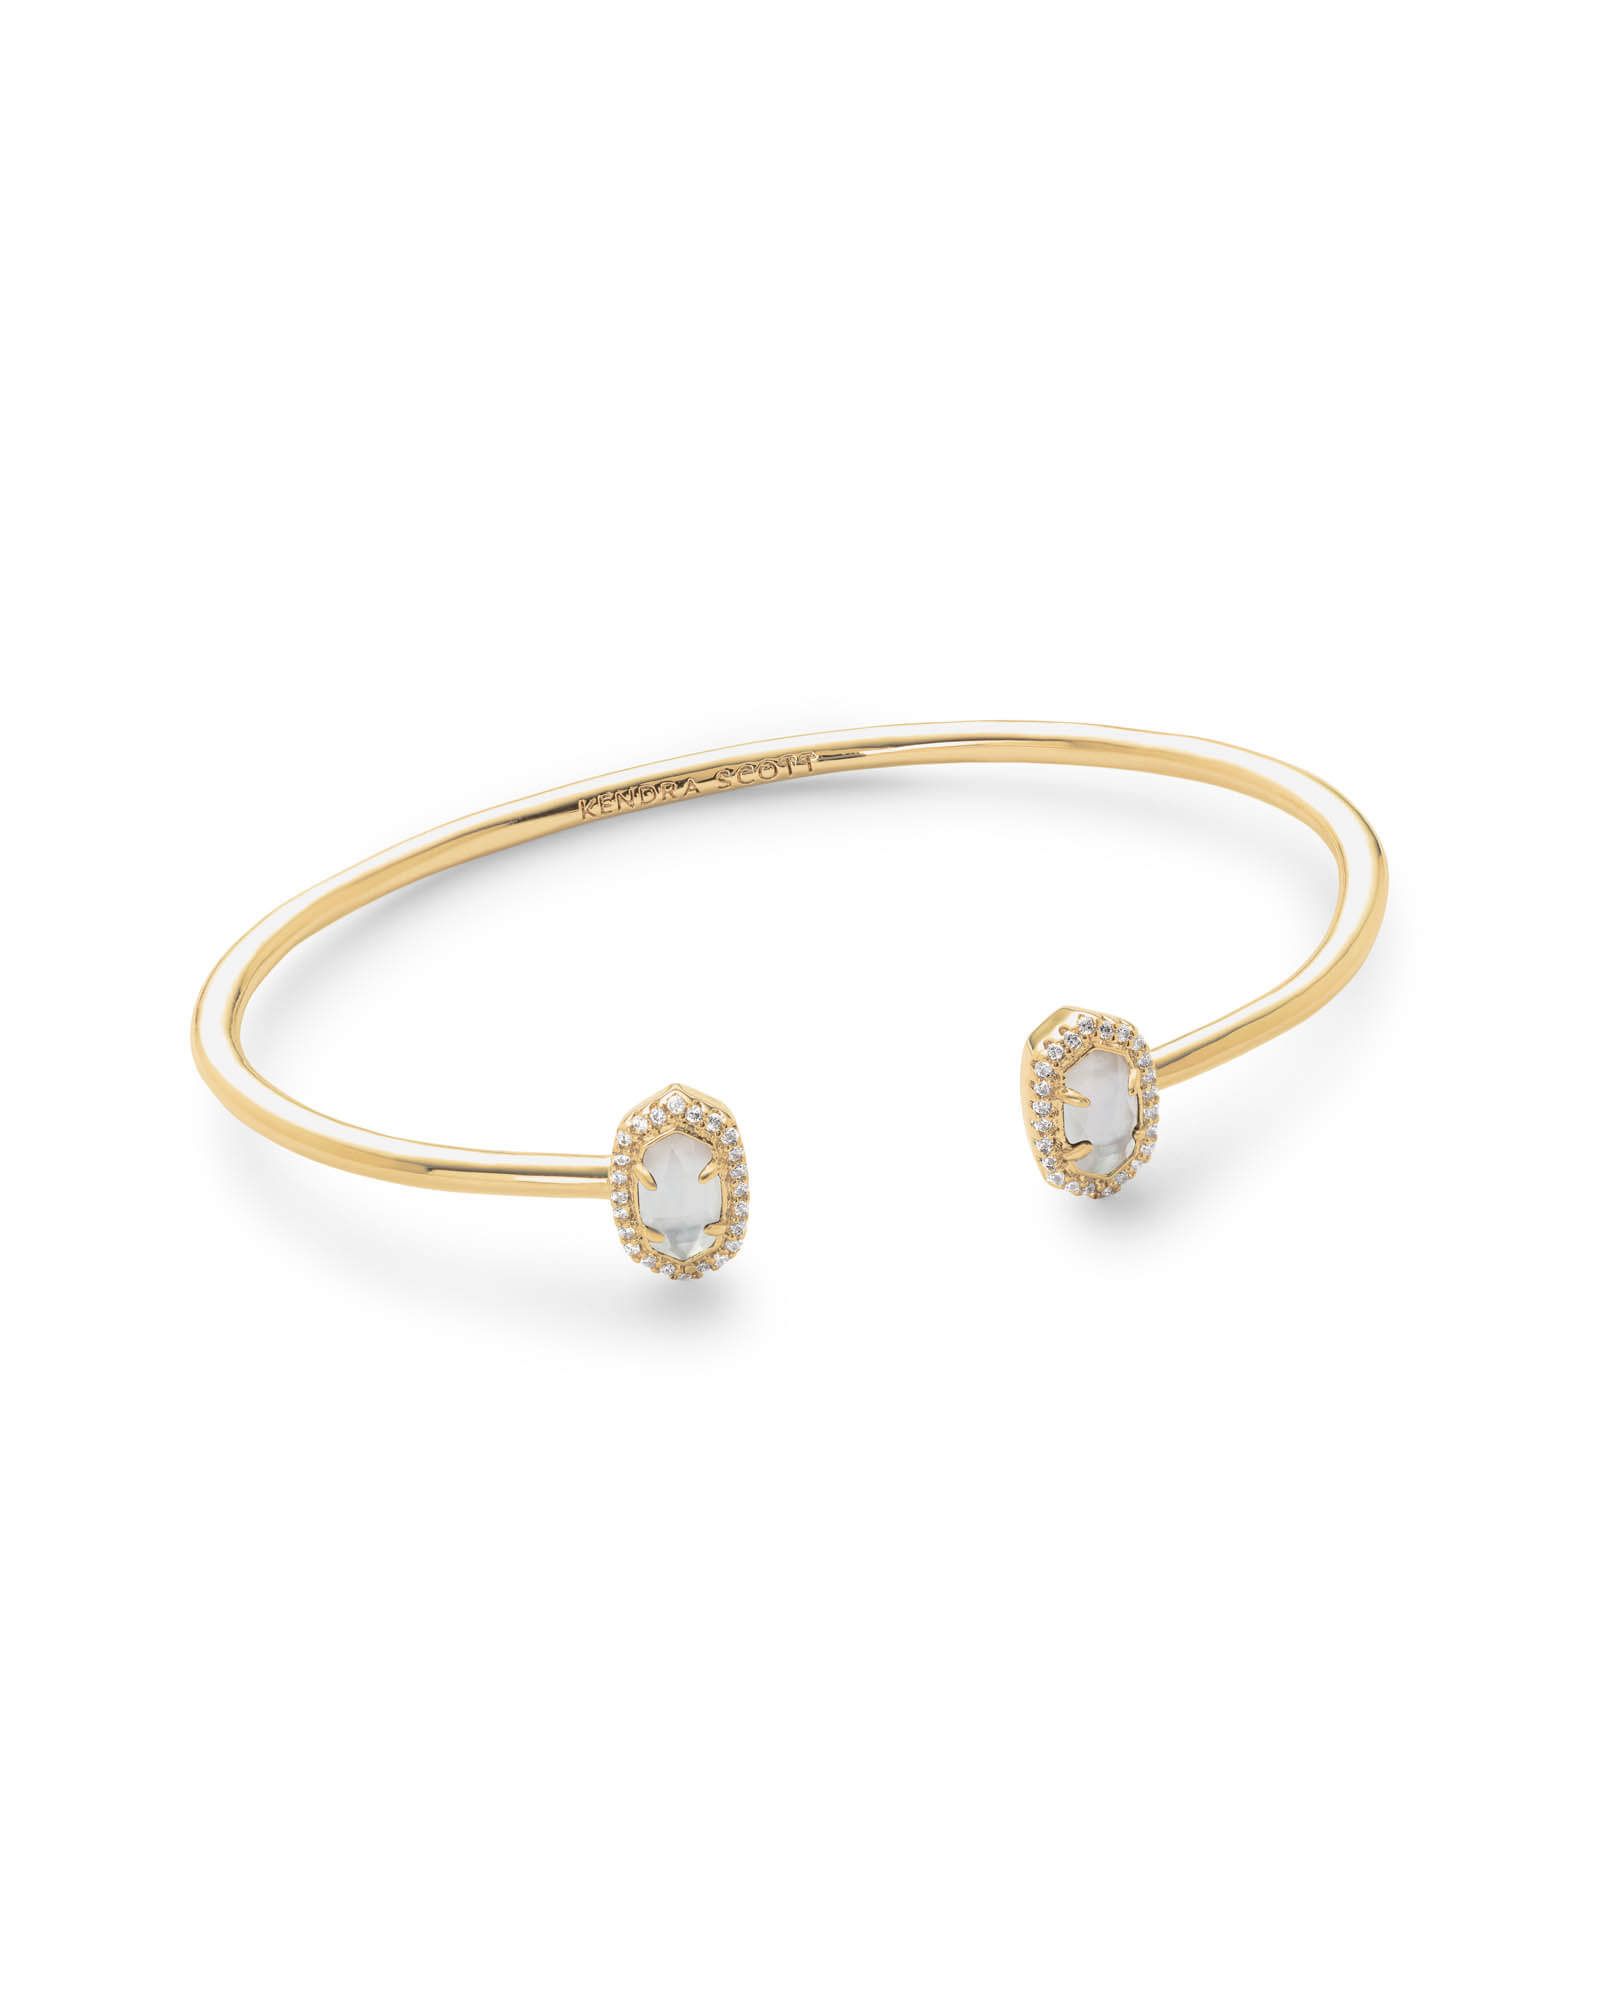 Calla Gold Cuff Bracelet in Ivory Pearl | Kendra Scott | Kendra Scott